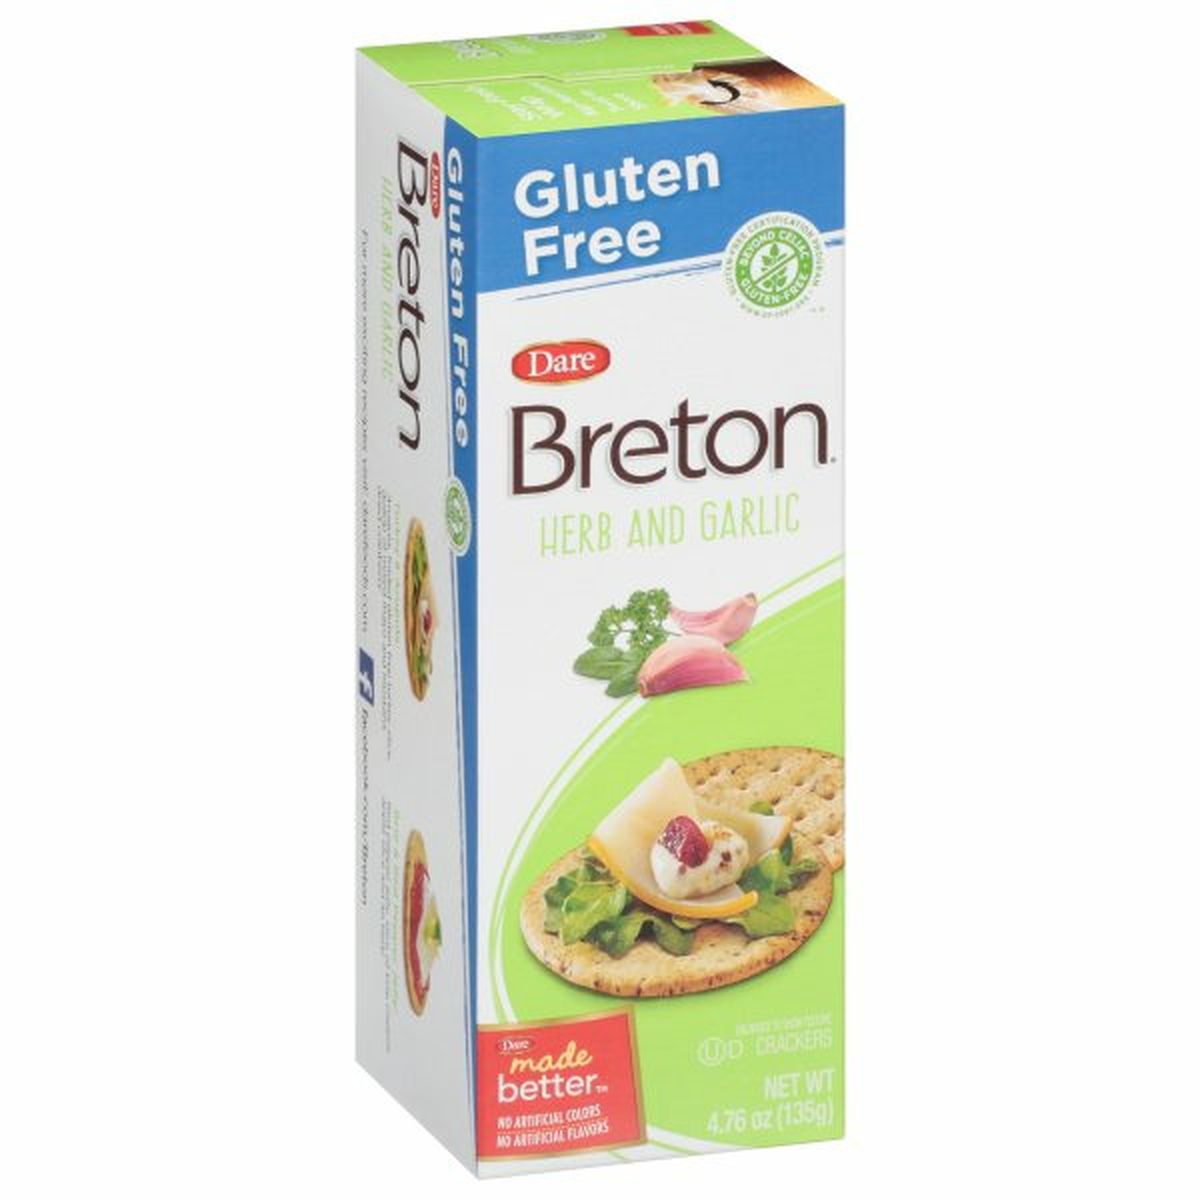 Calories in Dare Breton Crackers, Gluten Free, Herb and Garlic